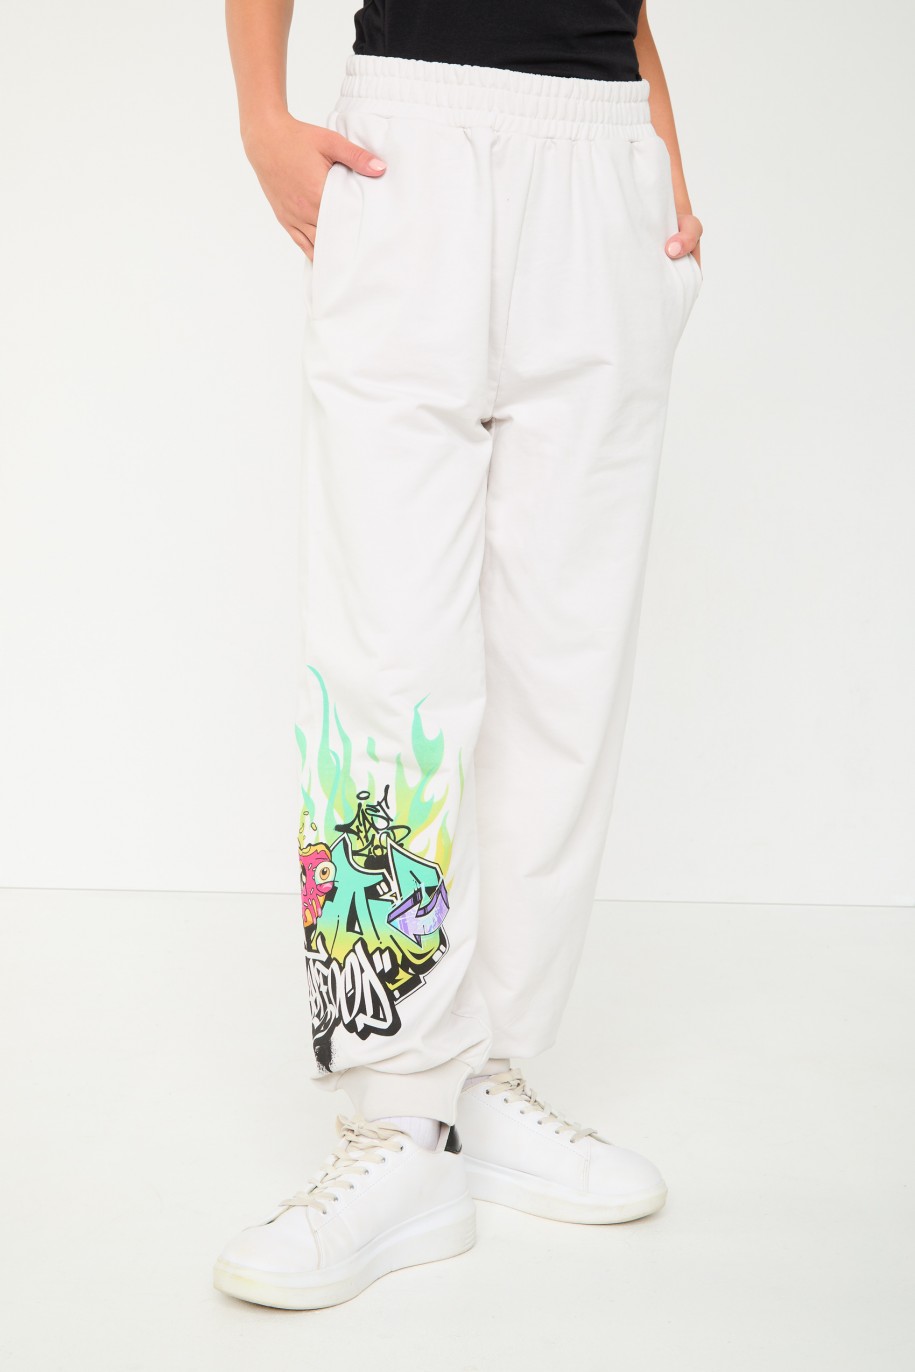 Kremowe spodnie z nadrukiem graffiti - 43855